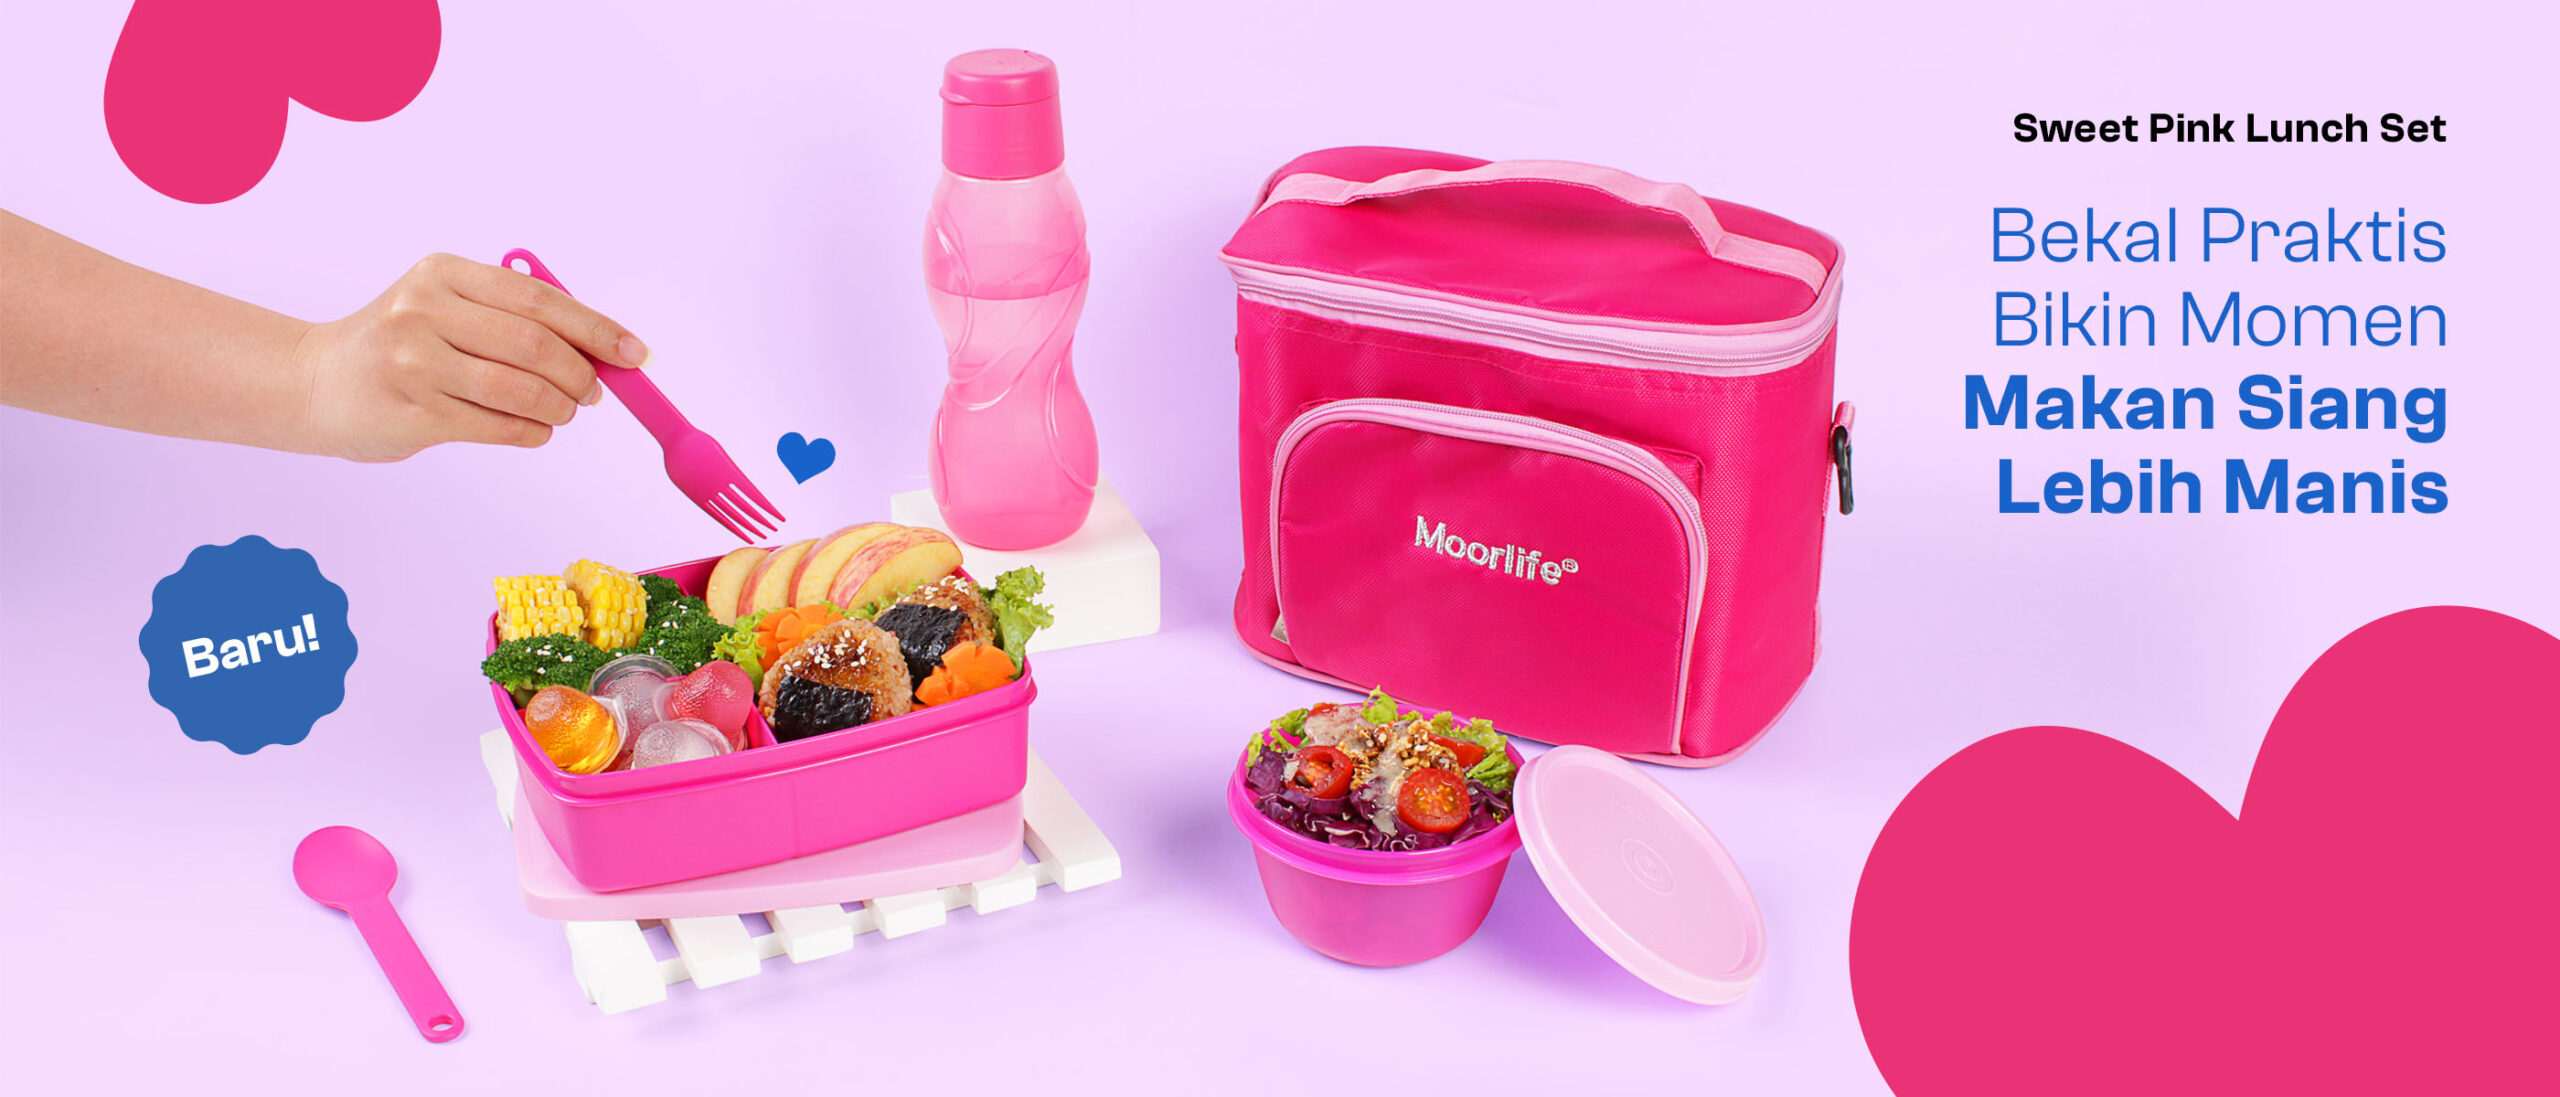 Website Banner MPB Mei 1400 x 600 px_Sweet Pink Lunch Set